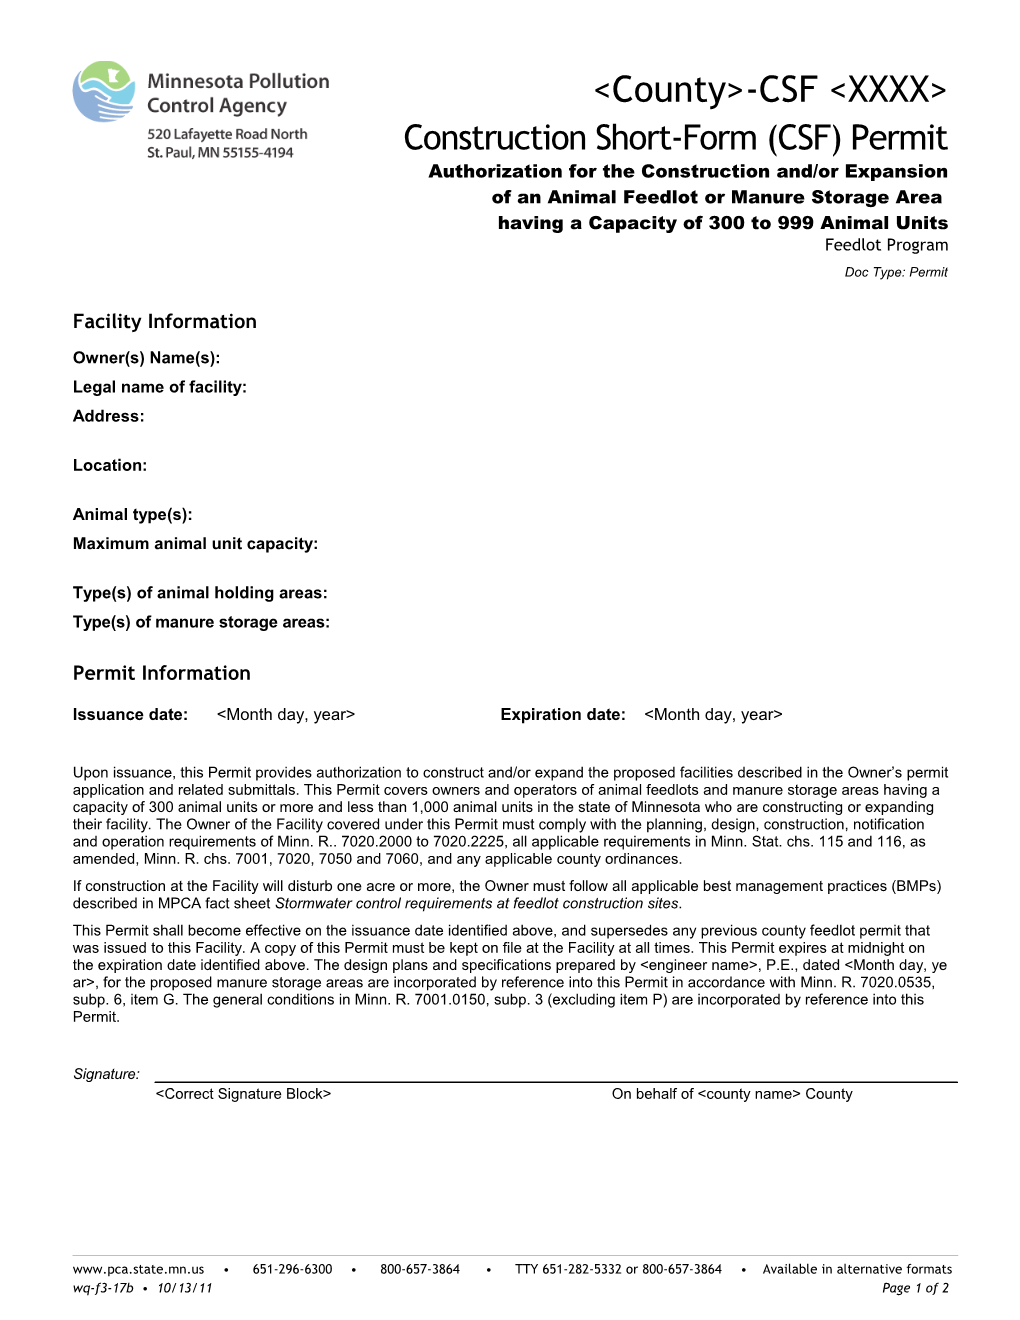 Construction Short Form Permit - County-CSF